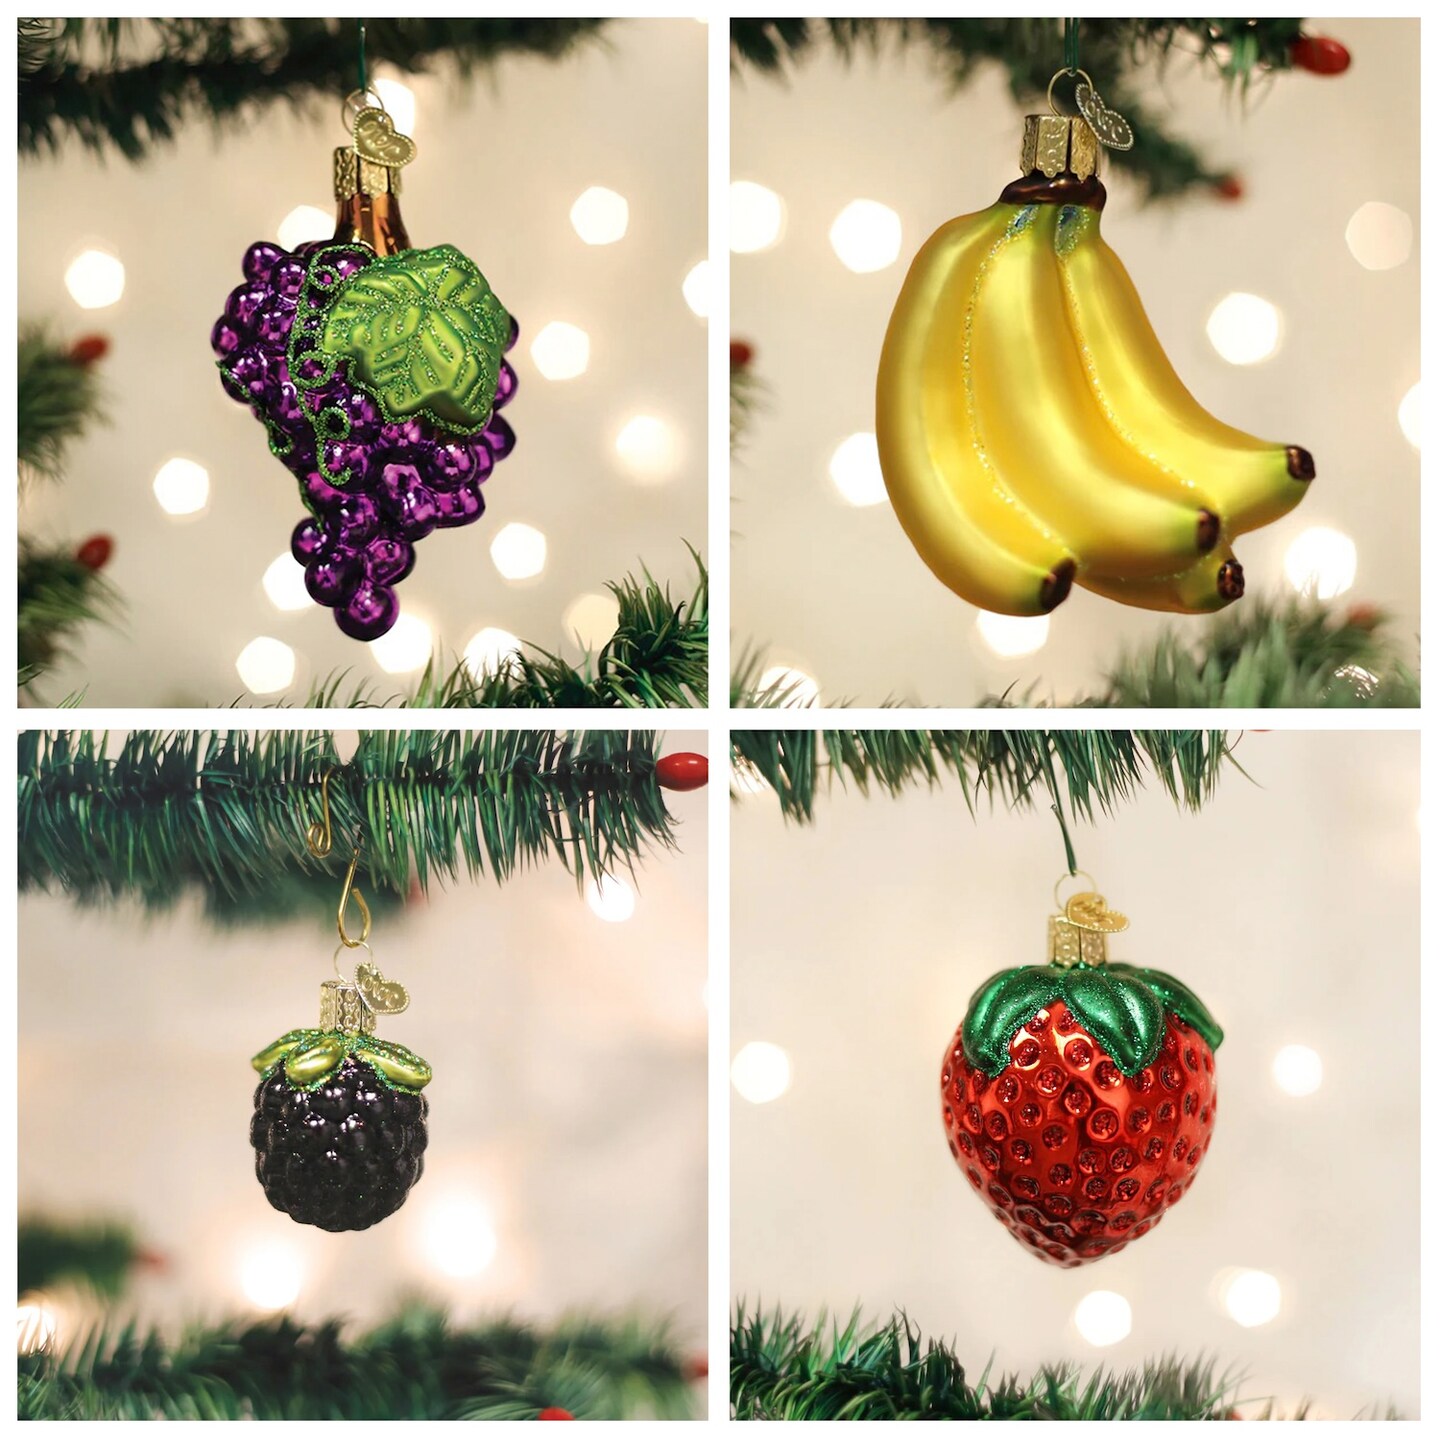 Old World Christmas: Fruit Hanging Ornaments, Set of 8